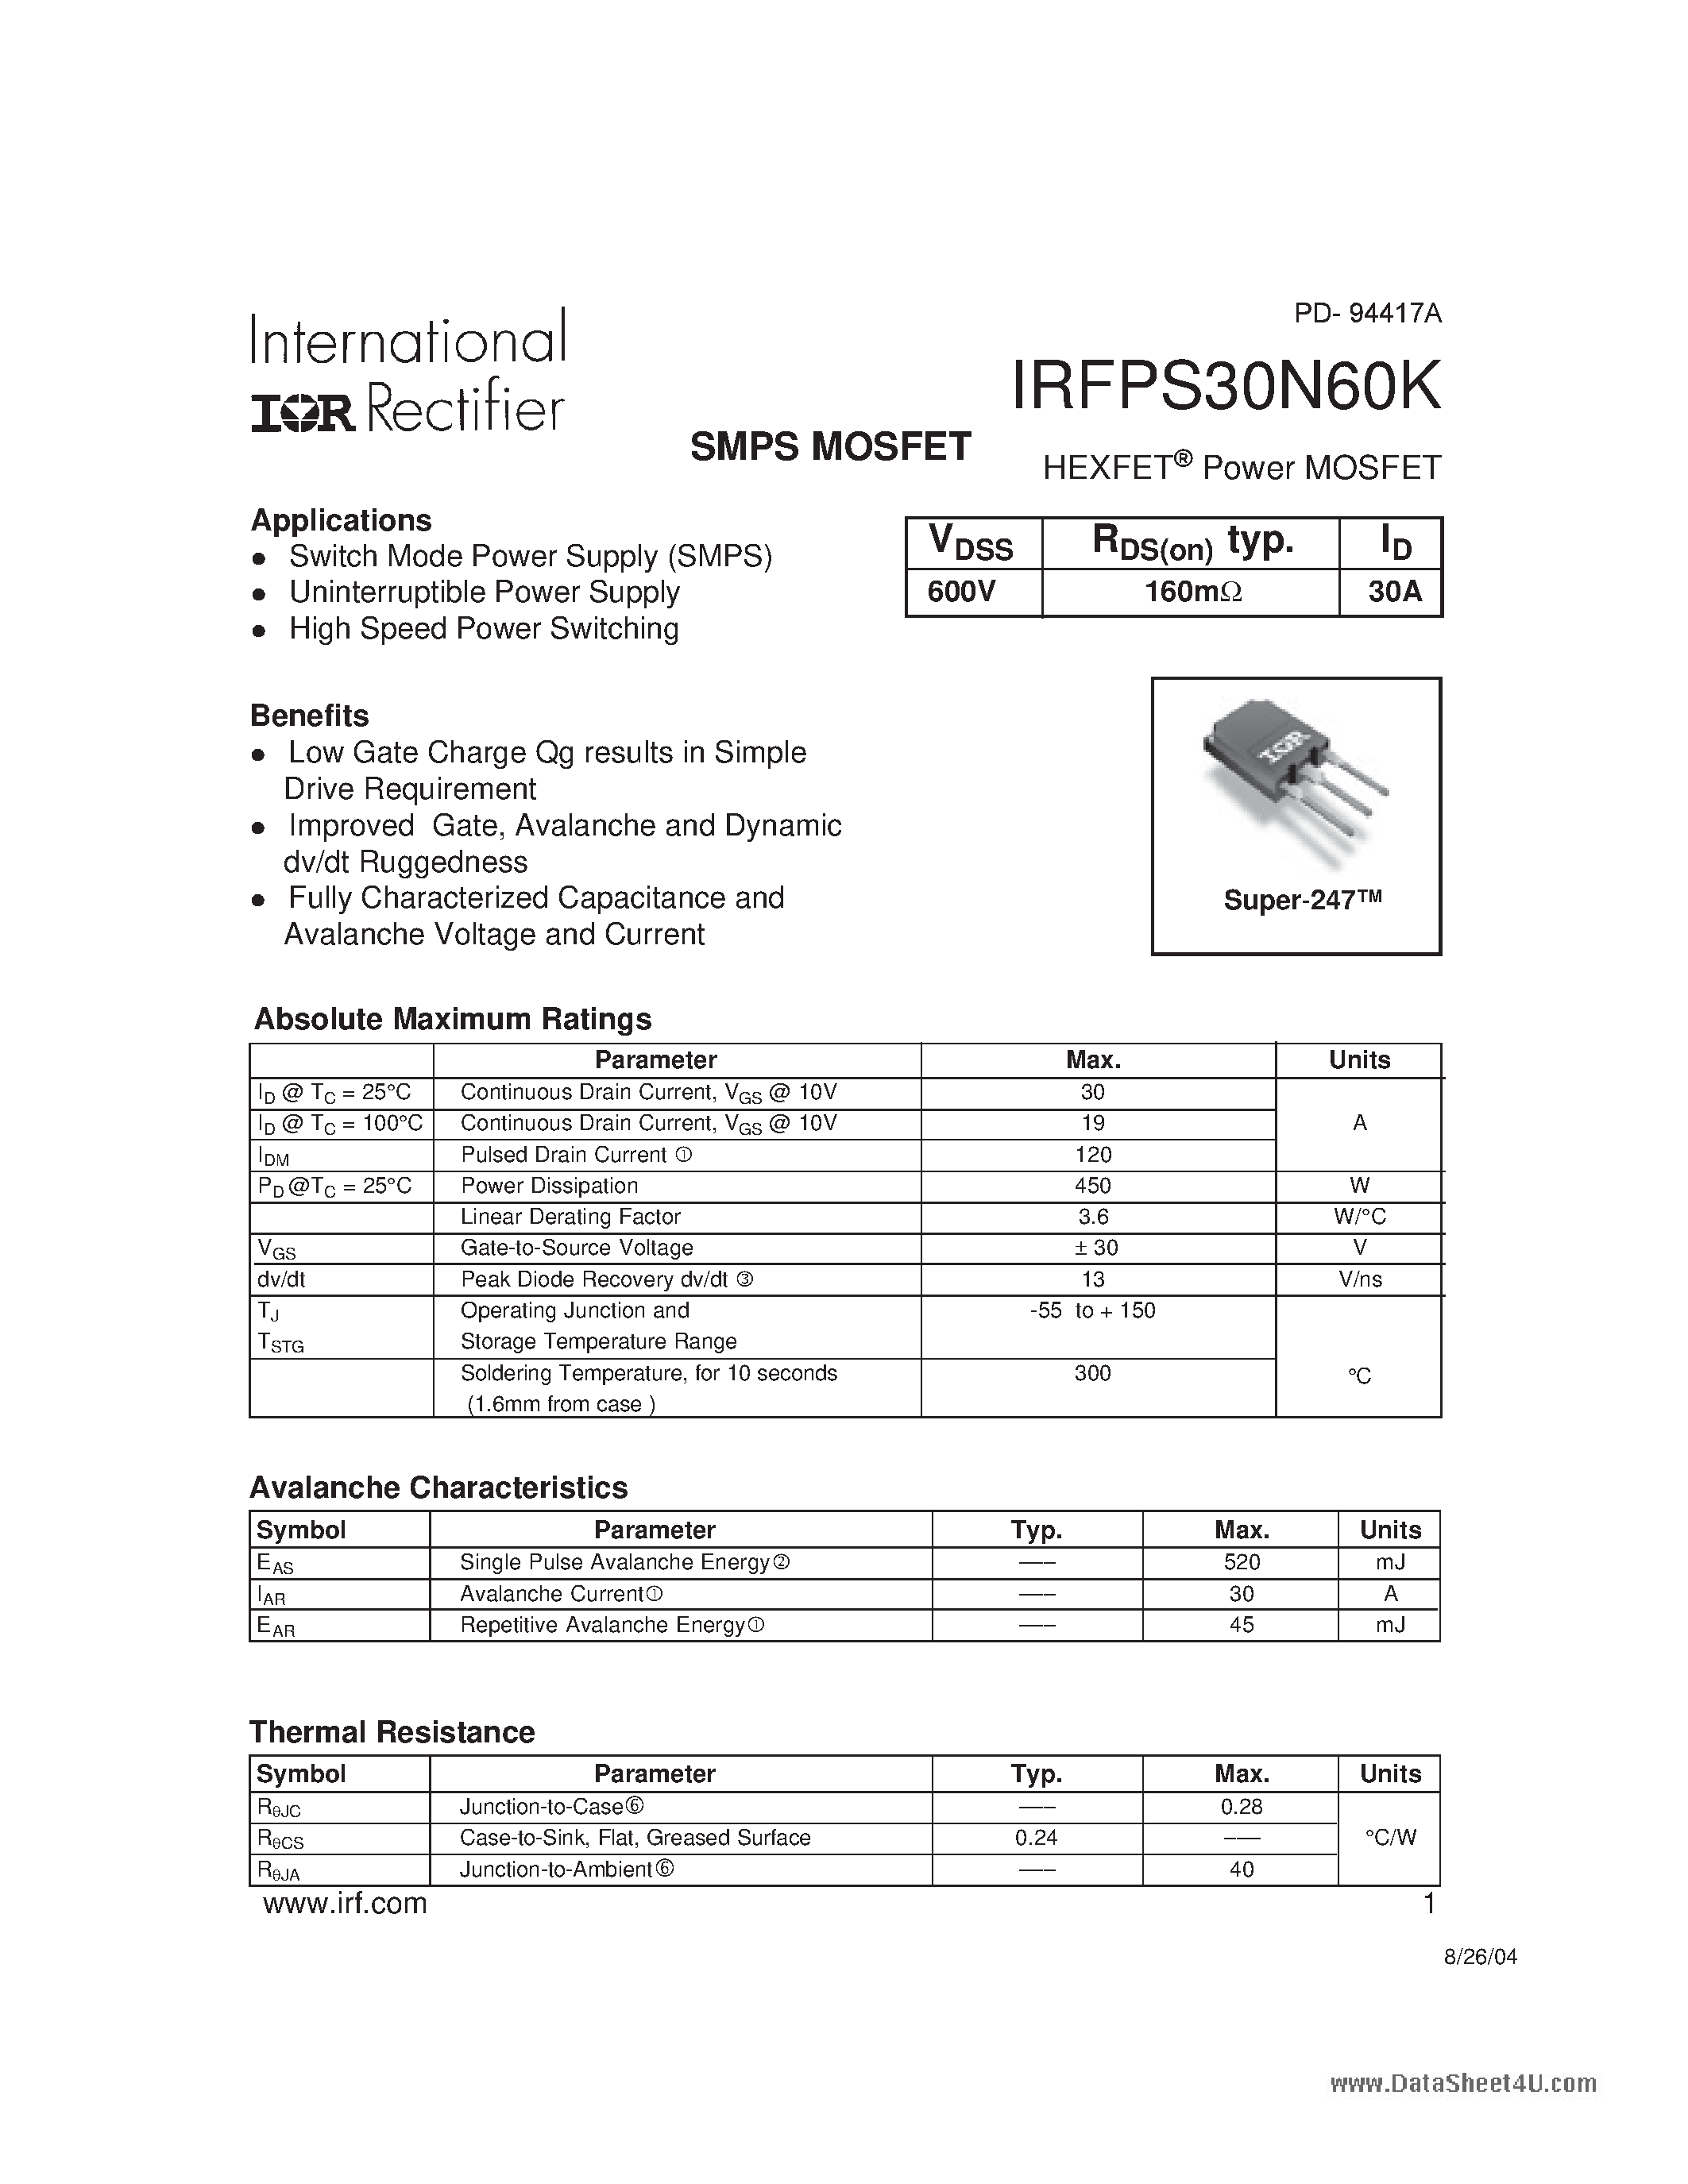 Datasheet IRFPS30N60K - SMPS MOSFET page 1